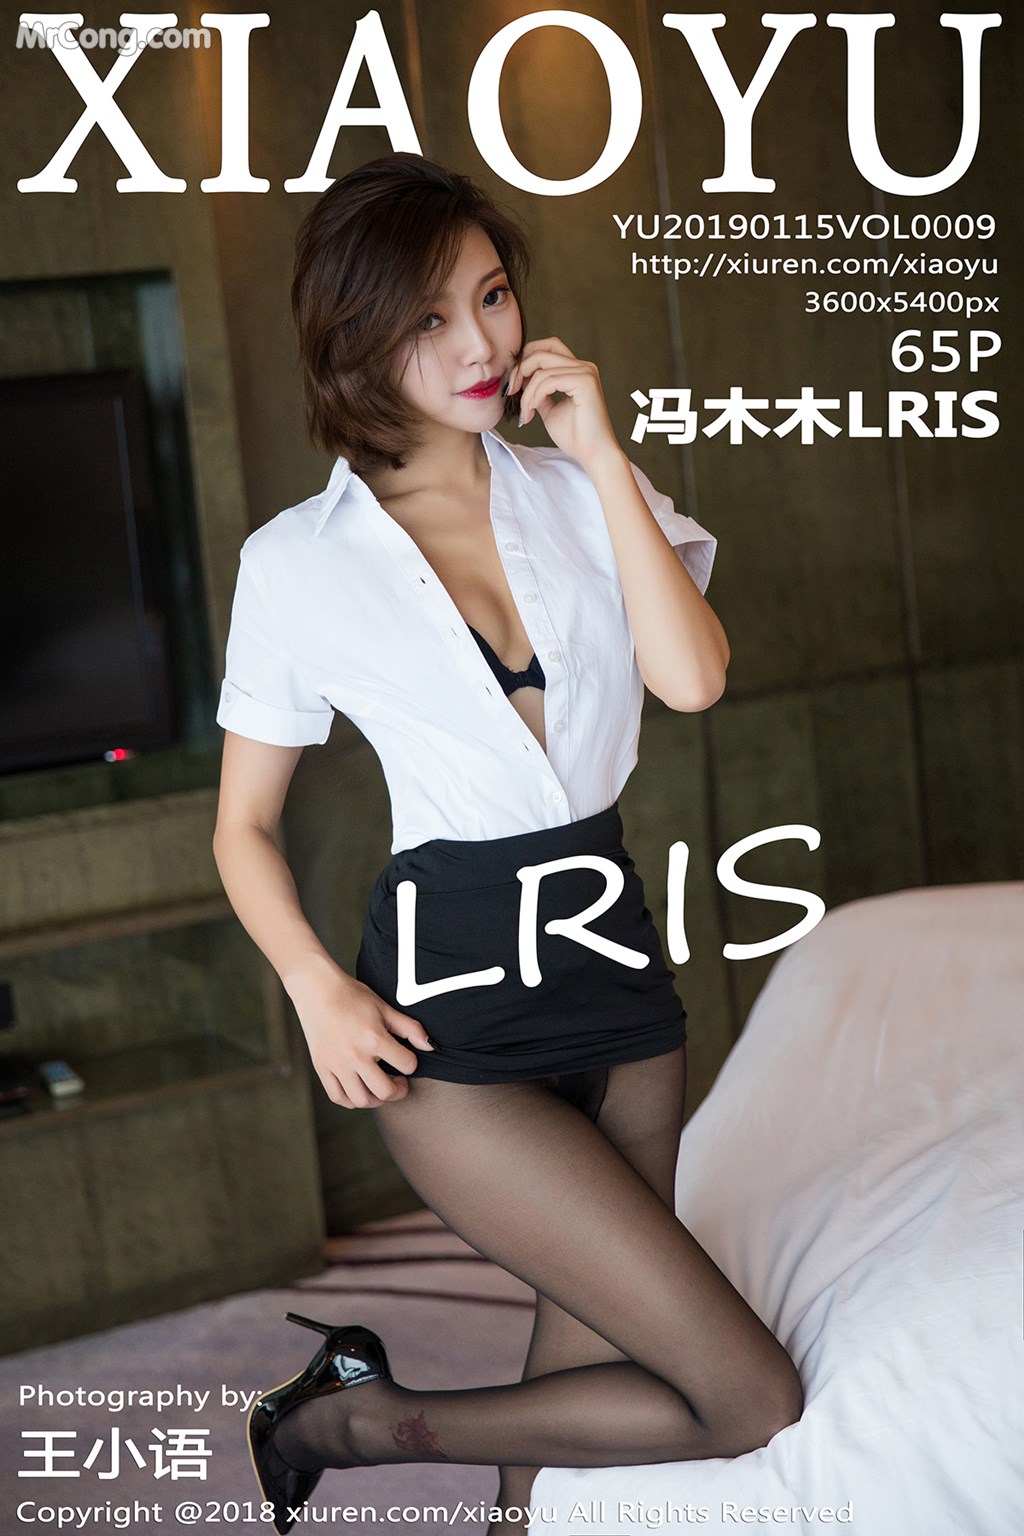 XiaoYu Vol. 2009: Model LRIS (冯 木木) (66 pictures) photo 4-5